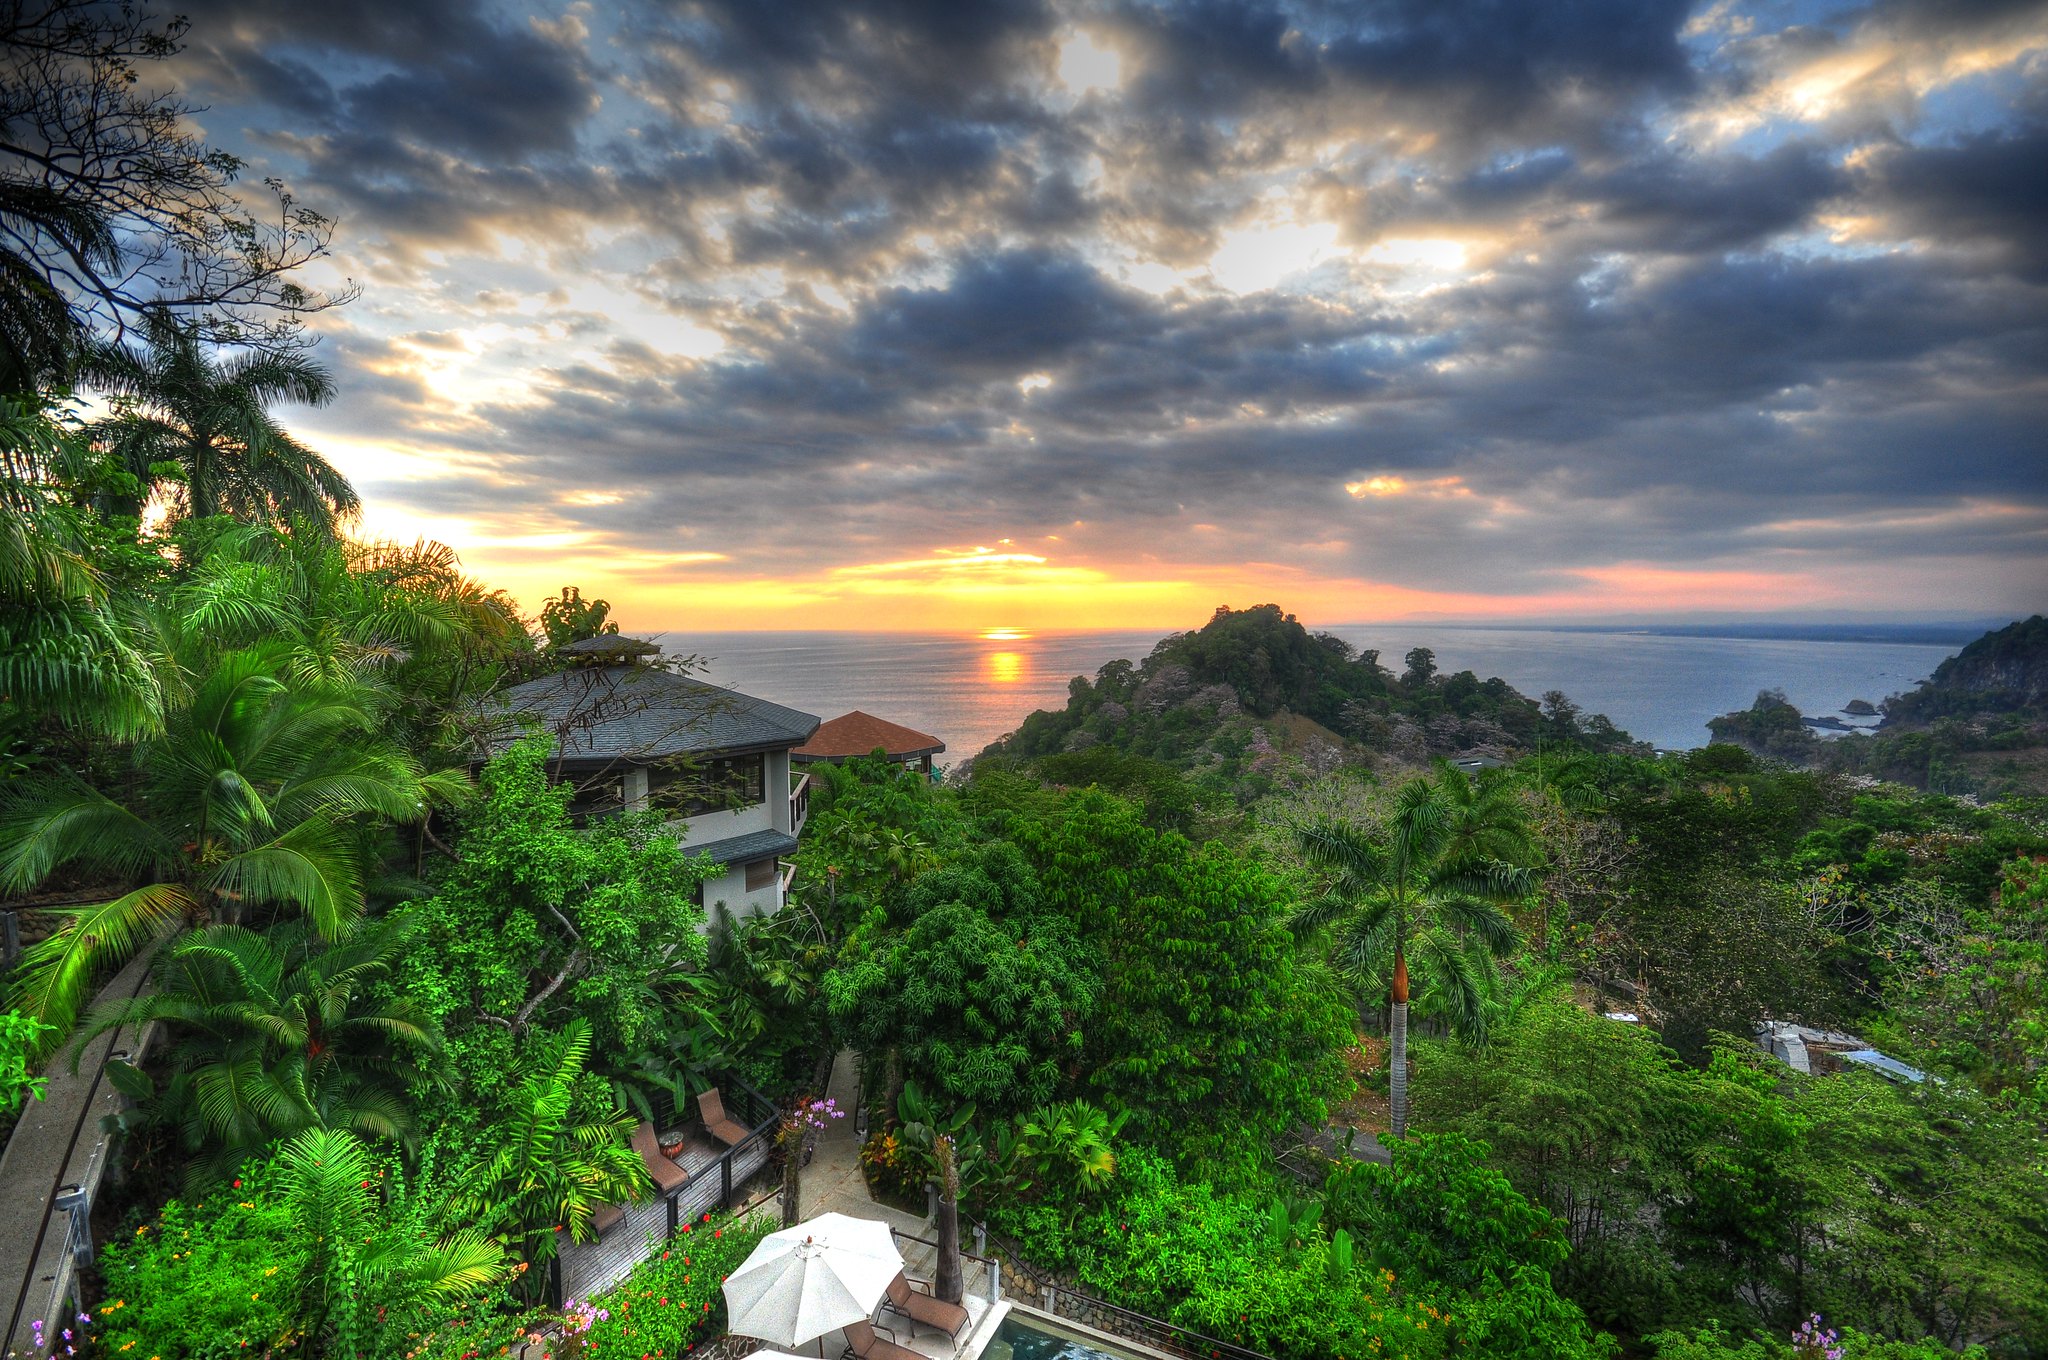 Exploring Costa Rica's Breathtaking Landscapes